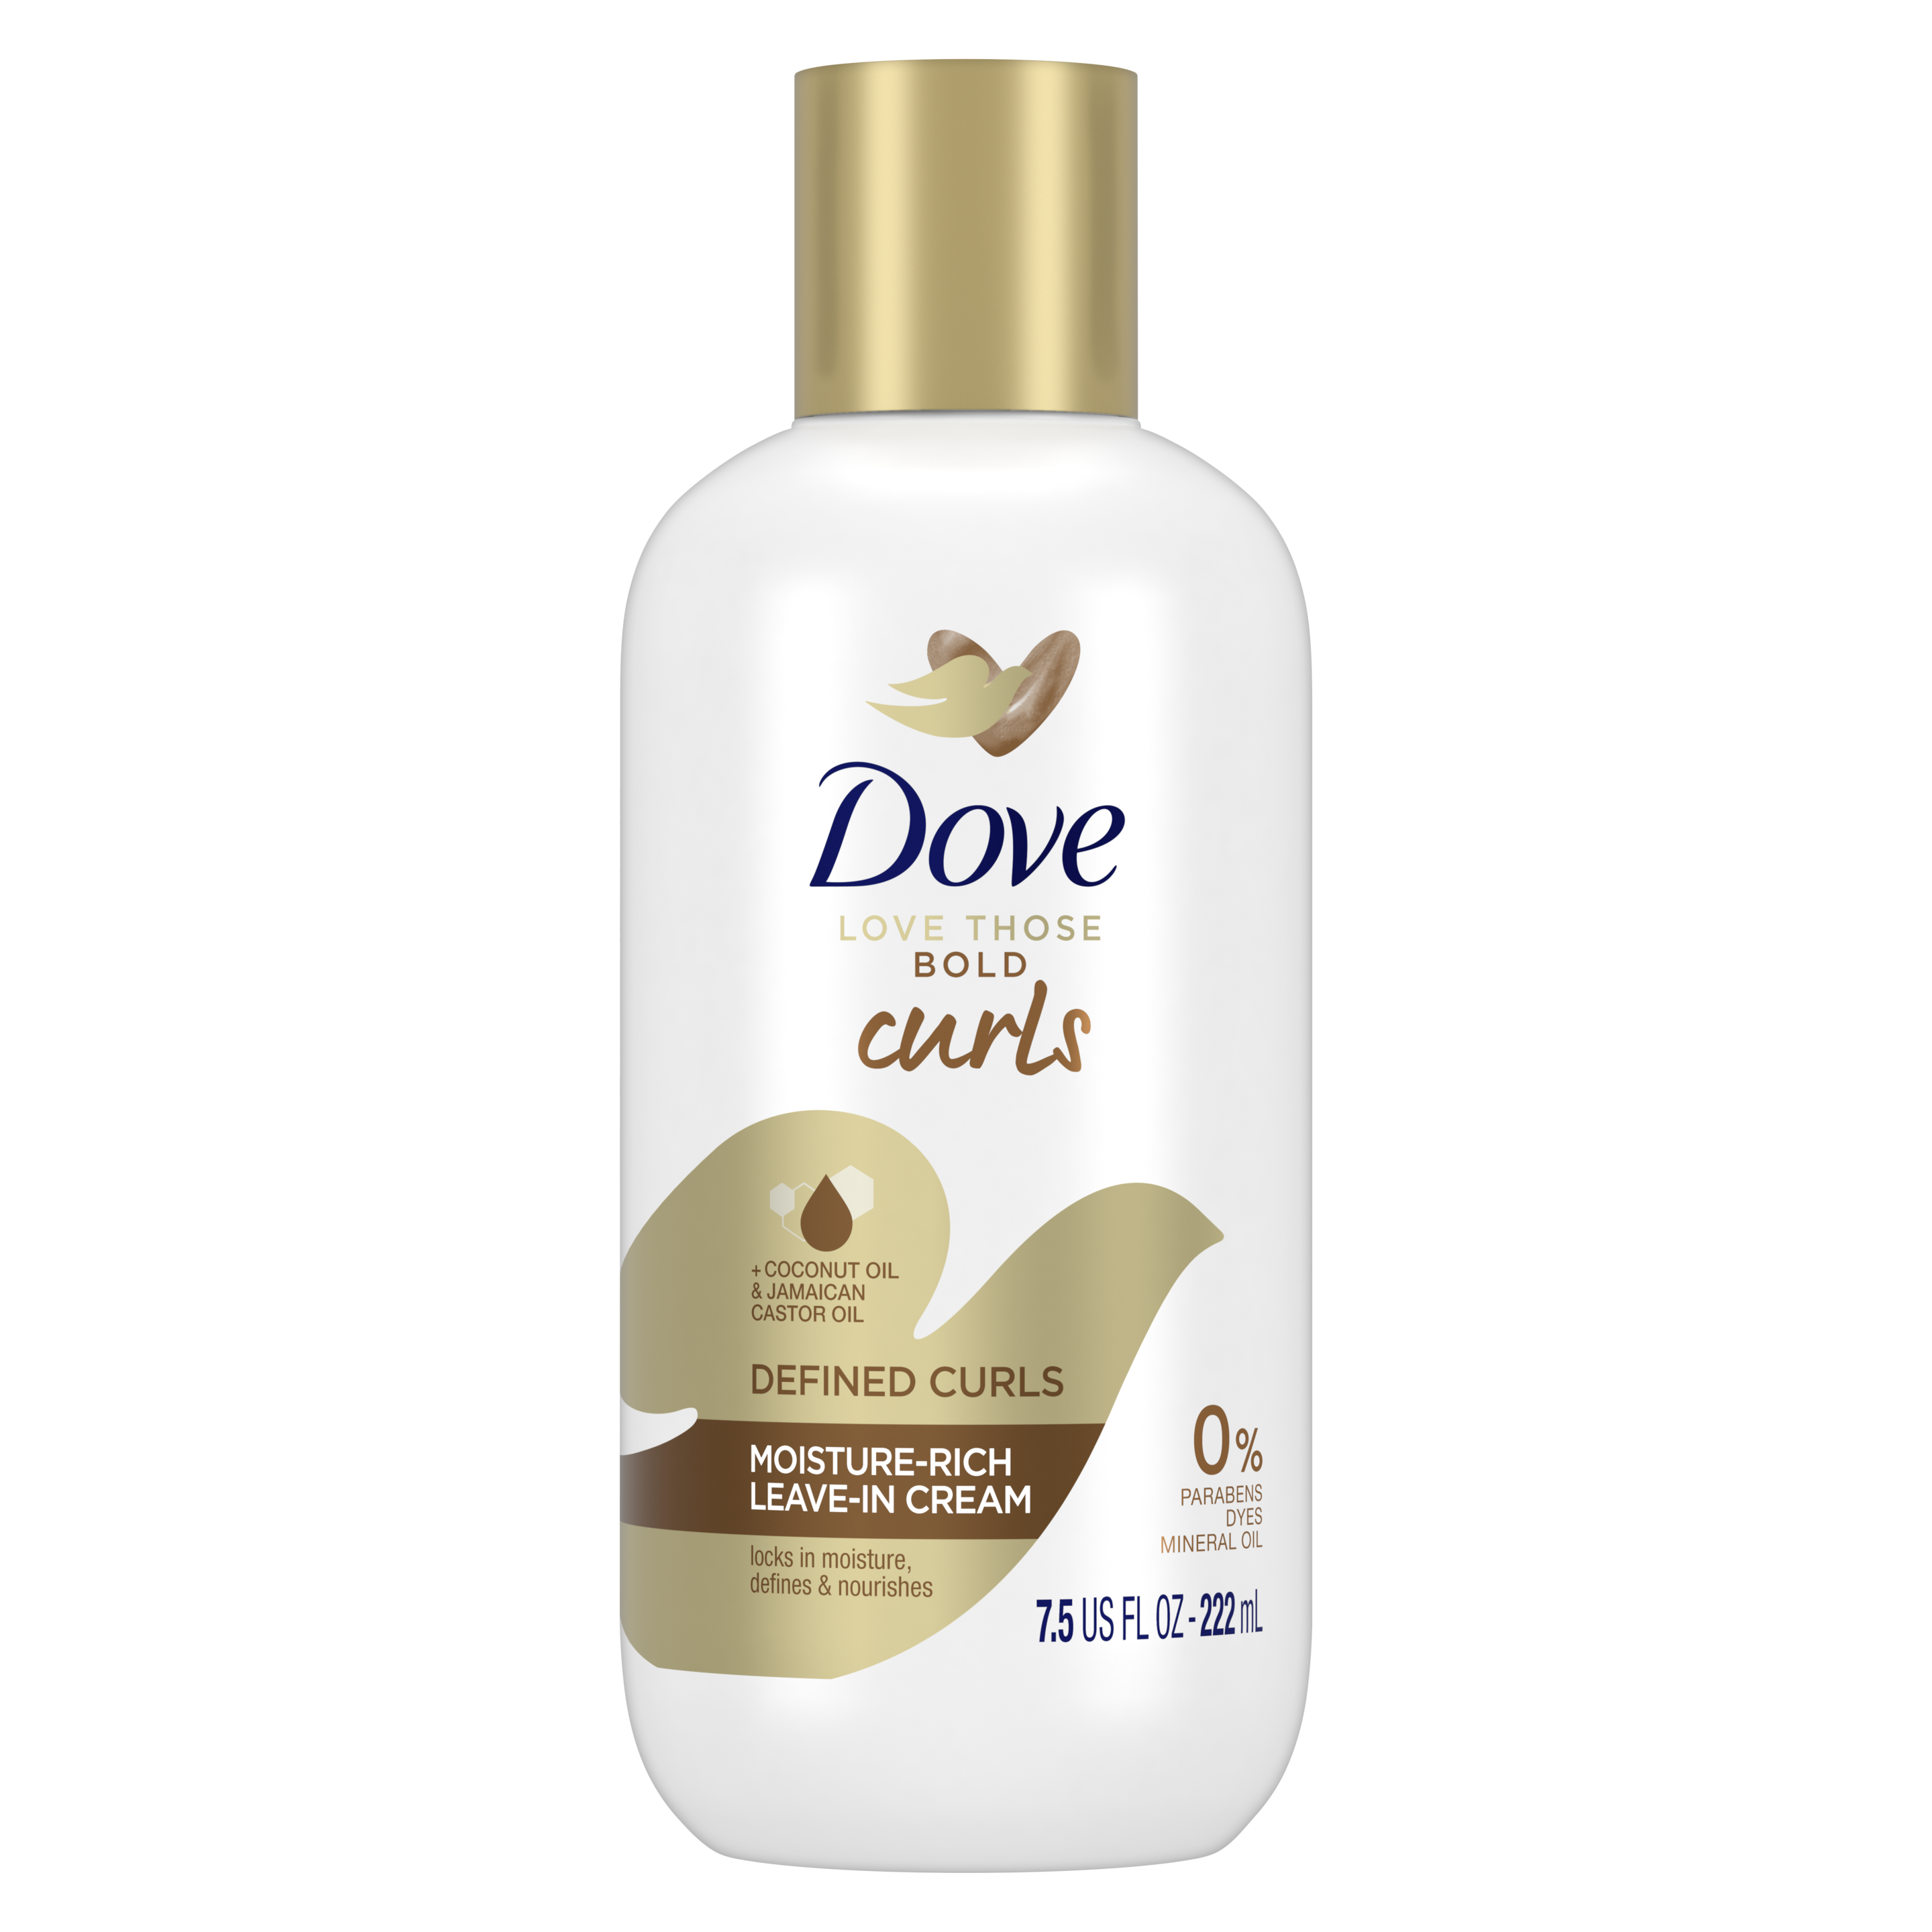 Dove Love Those Bold Curls Defined Curls Leave-In Cream